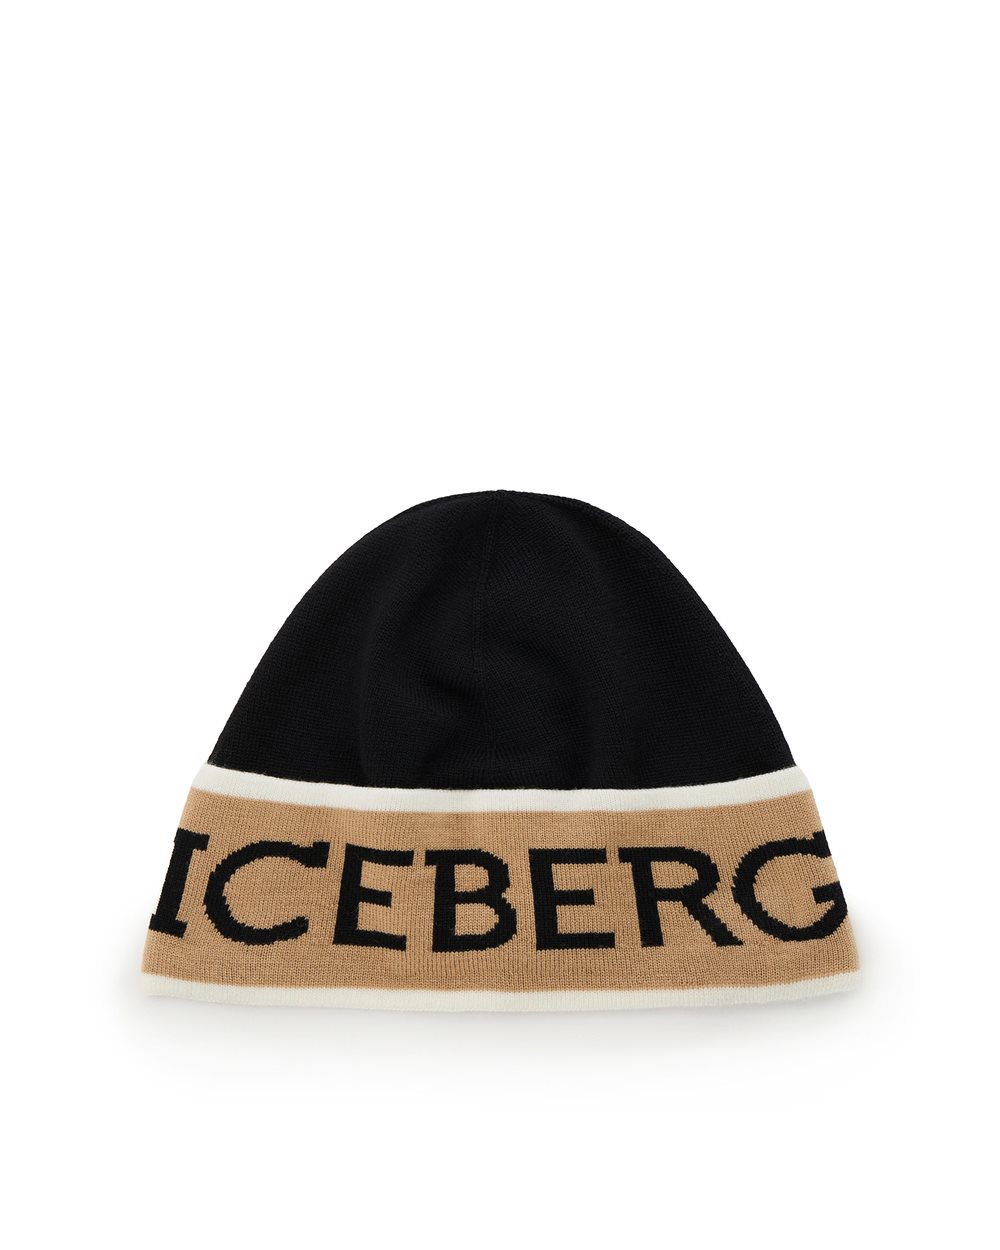 Black wool beanie with logo - carosello gift guide uomo | Iceberg - Official Website